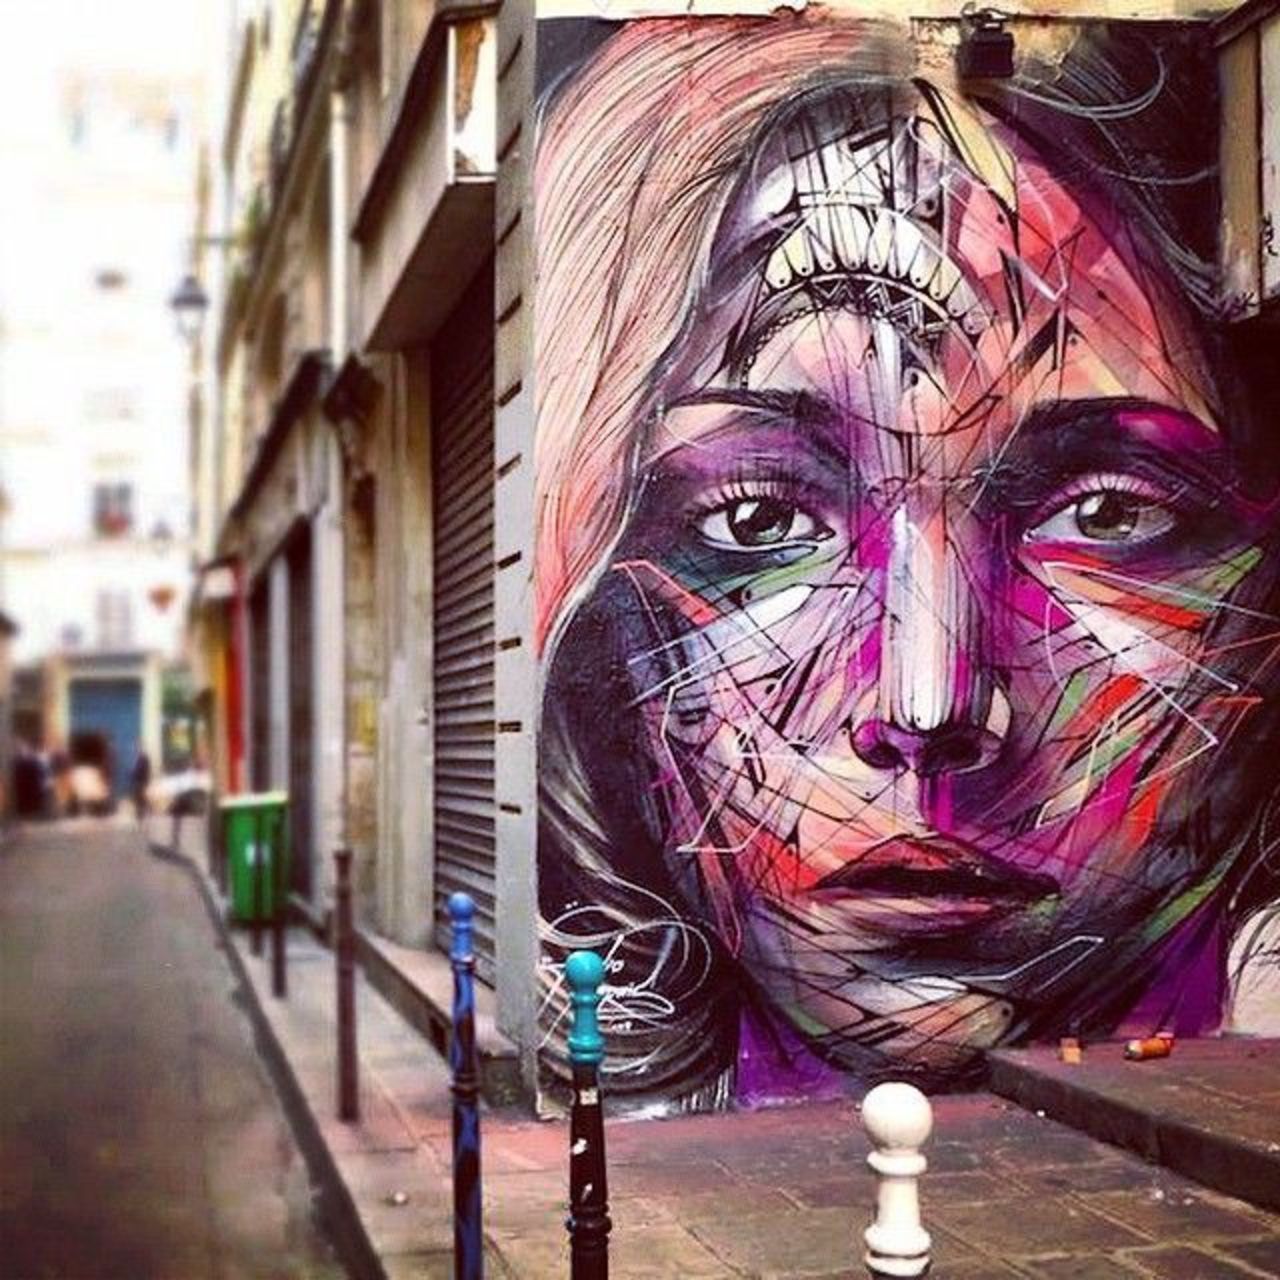 Hopare in Paris#streetart #mural #art #graffiti https://t.co/l4av84Cmuu